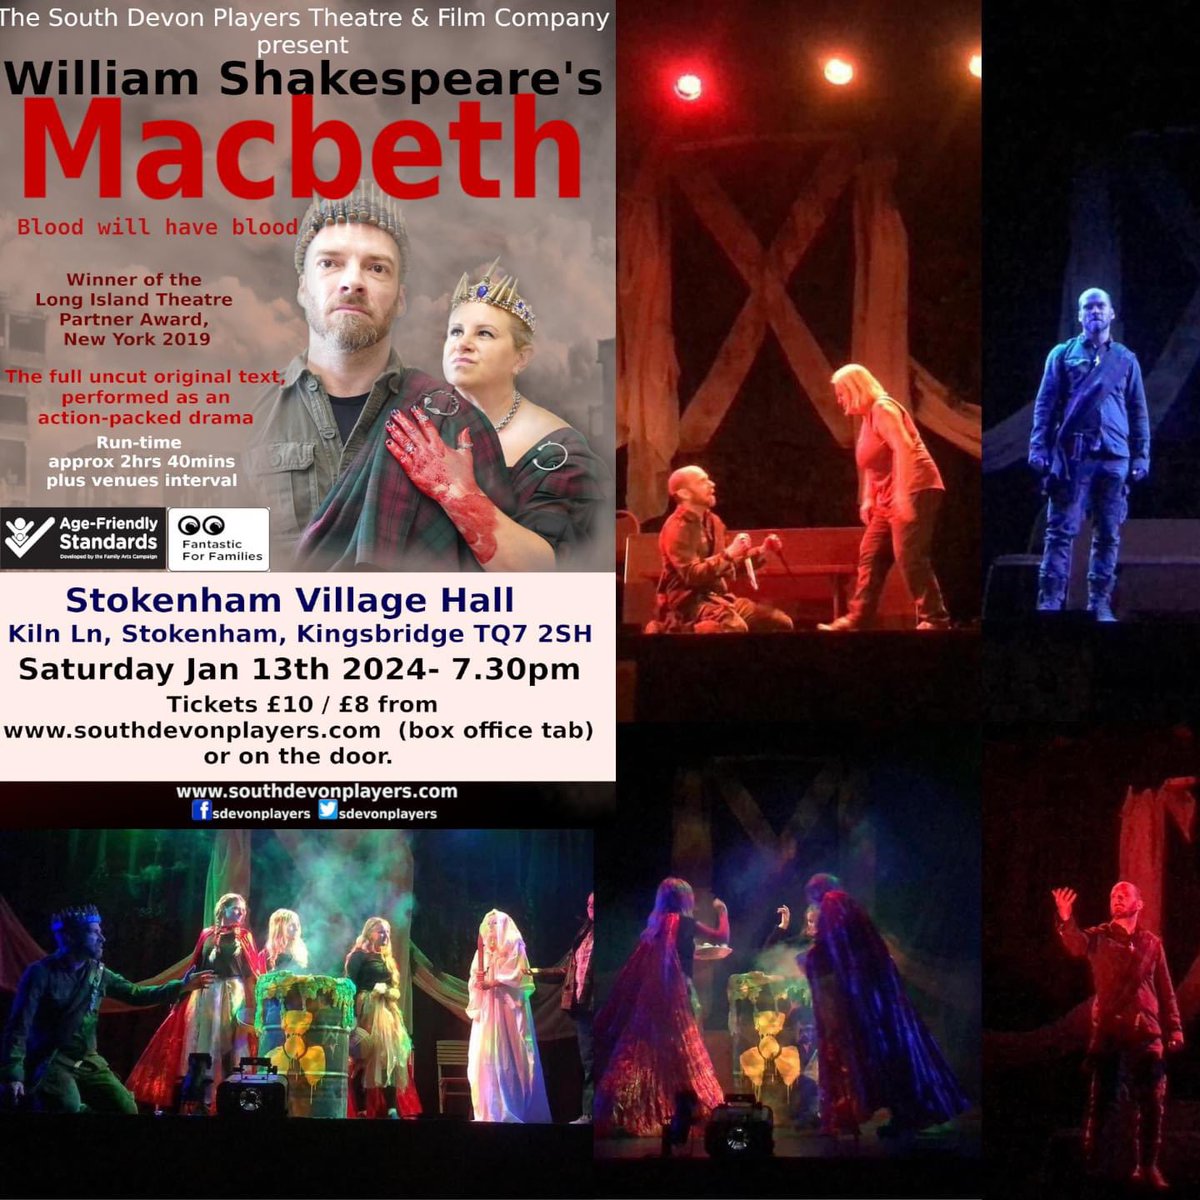 William Shakespeare's Macbeth - coming to Stokenham Village Hall. Saturday Jan 13 2024 - 7.30pm Ticket & show info at southdevonplayers.com/box-office.html #theatrearts #stokenham #kingsbridge #kingsbridgedevon #brixhamtheatre #brixhamdevon #macbeth #shakespeare #theatre